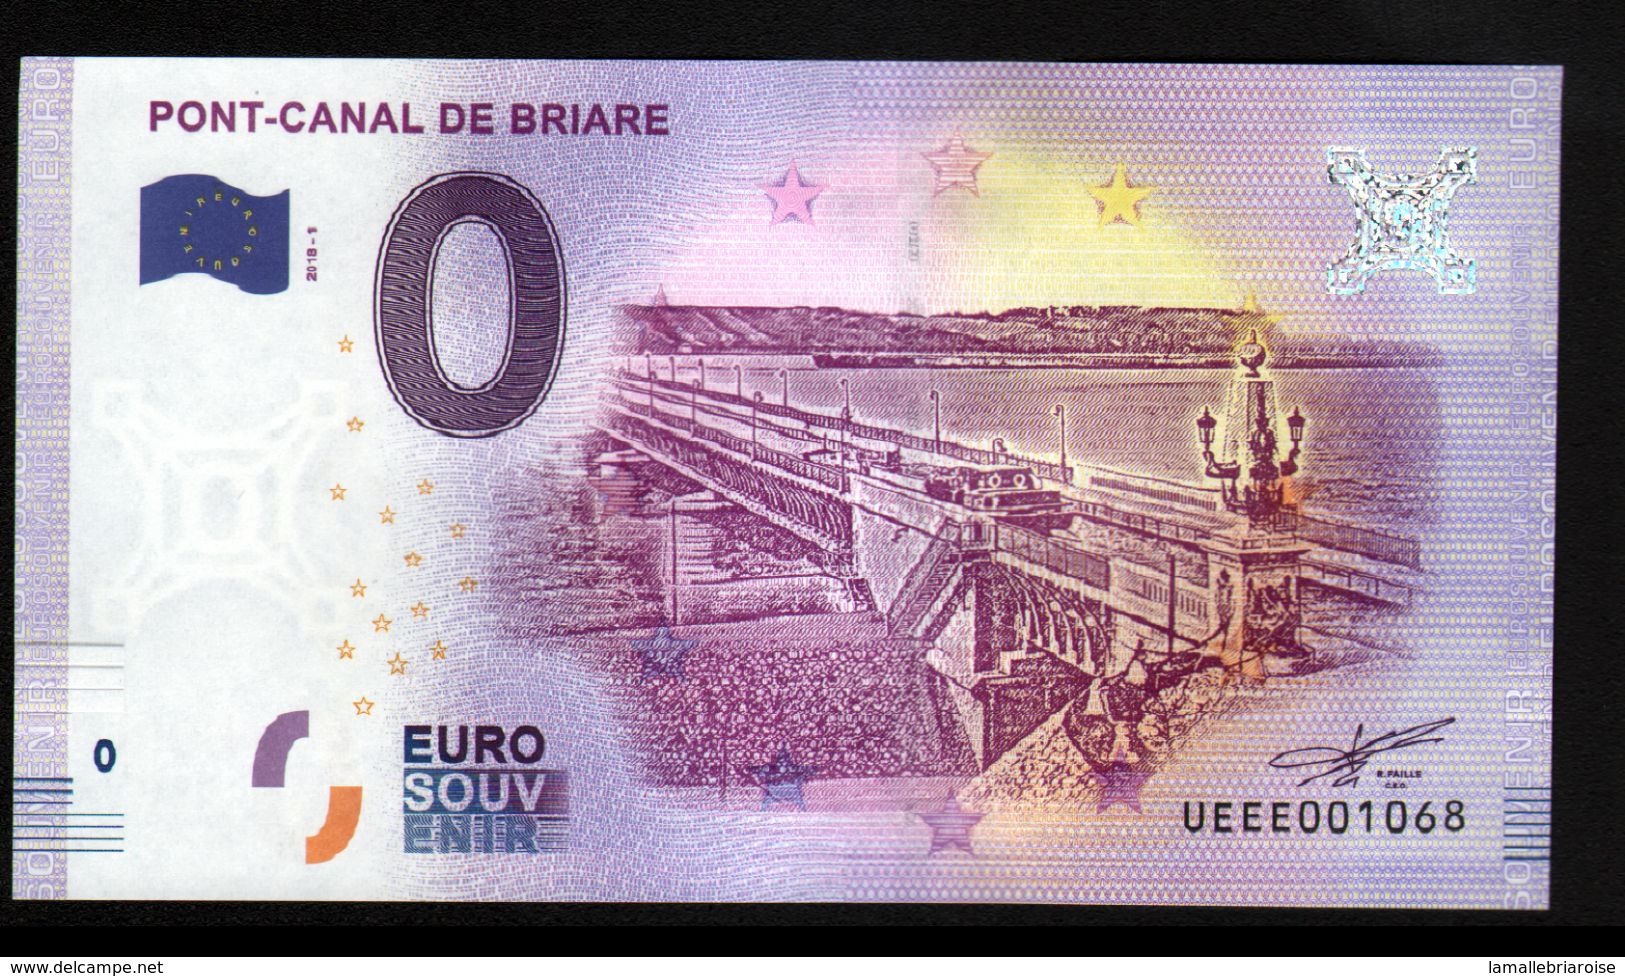 France - Billet Touristique 0 Euro 2018 N°1068 (UEEE001068/5000) - PONT-CANAL DE BRIARE - Prove Private